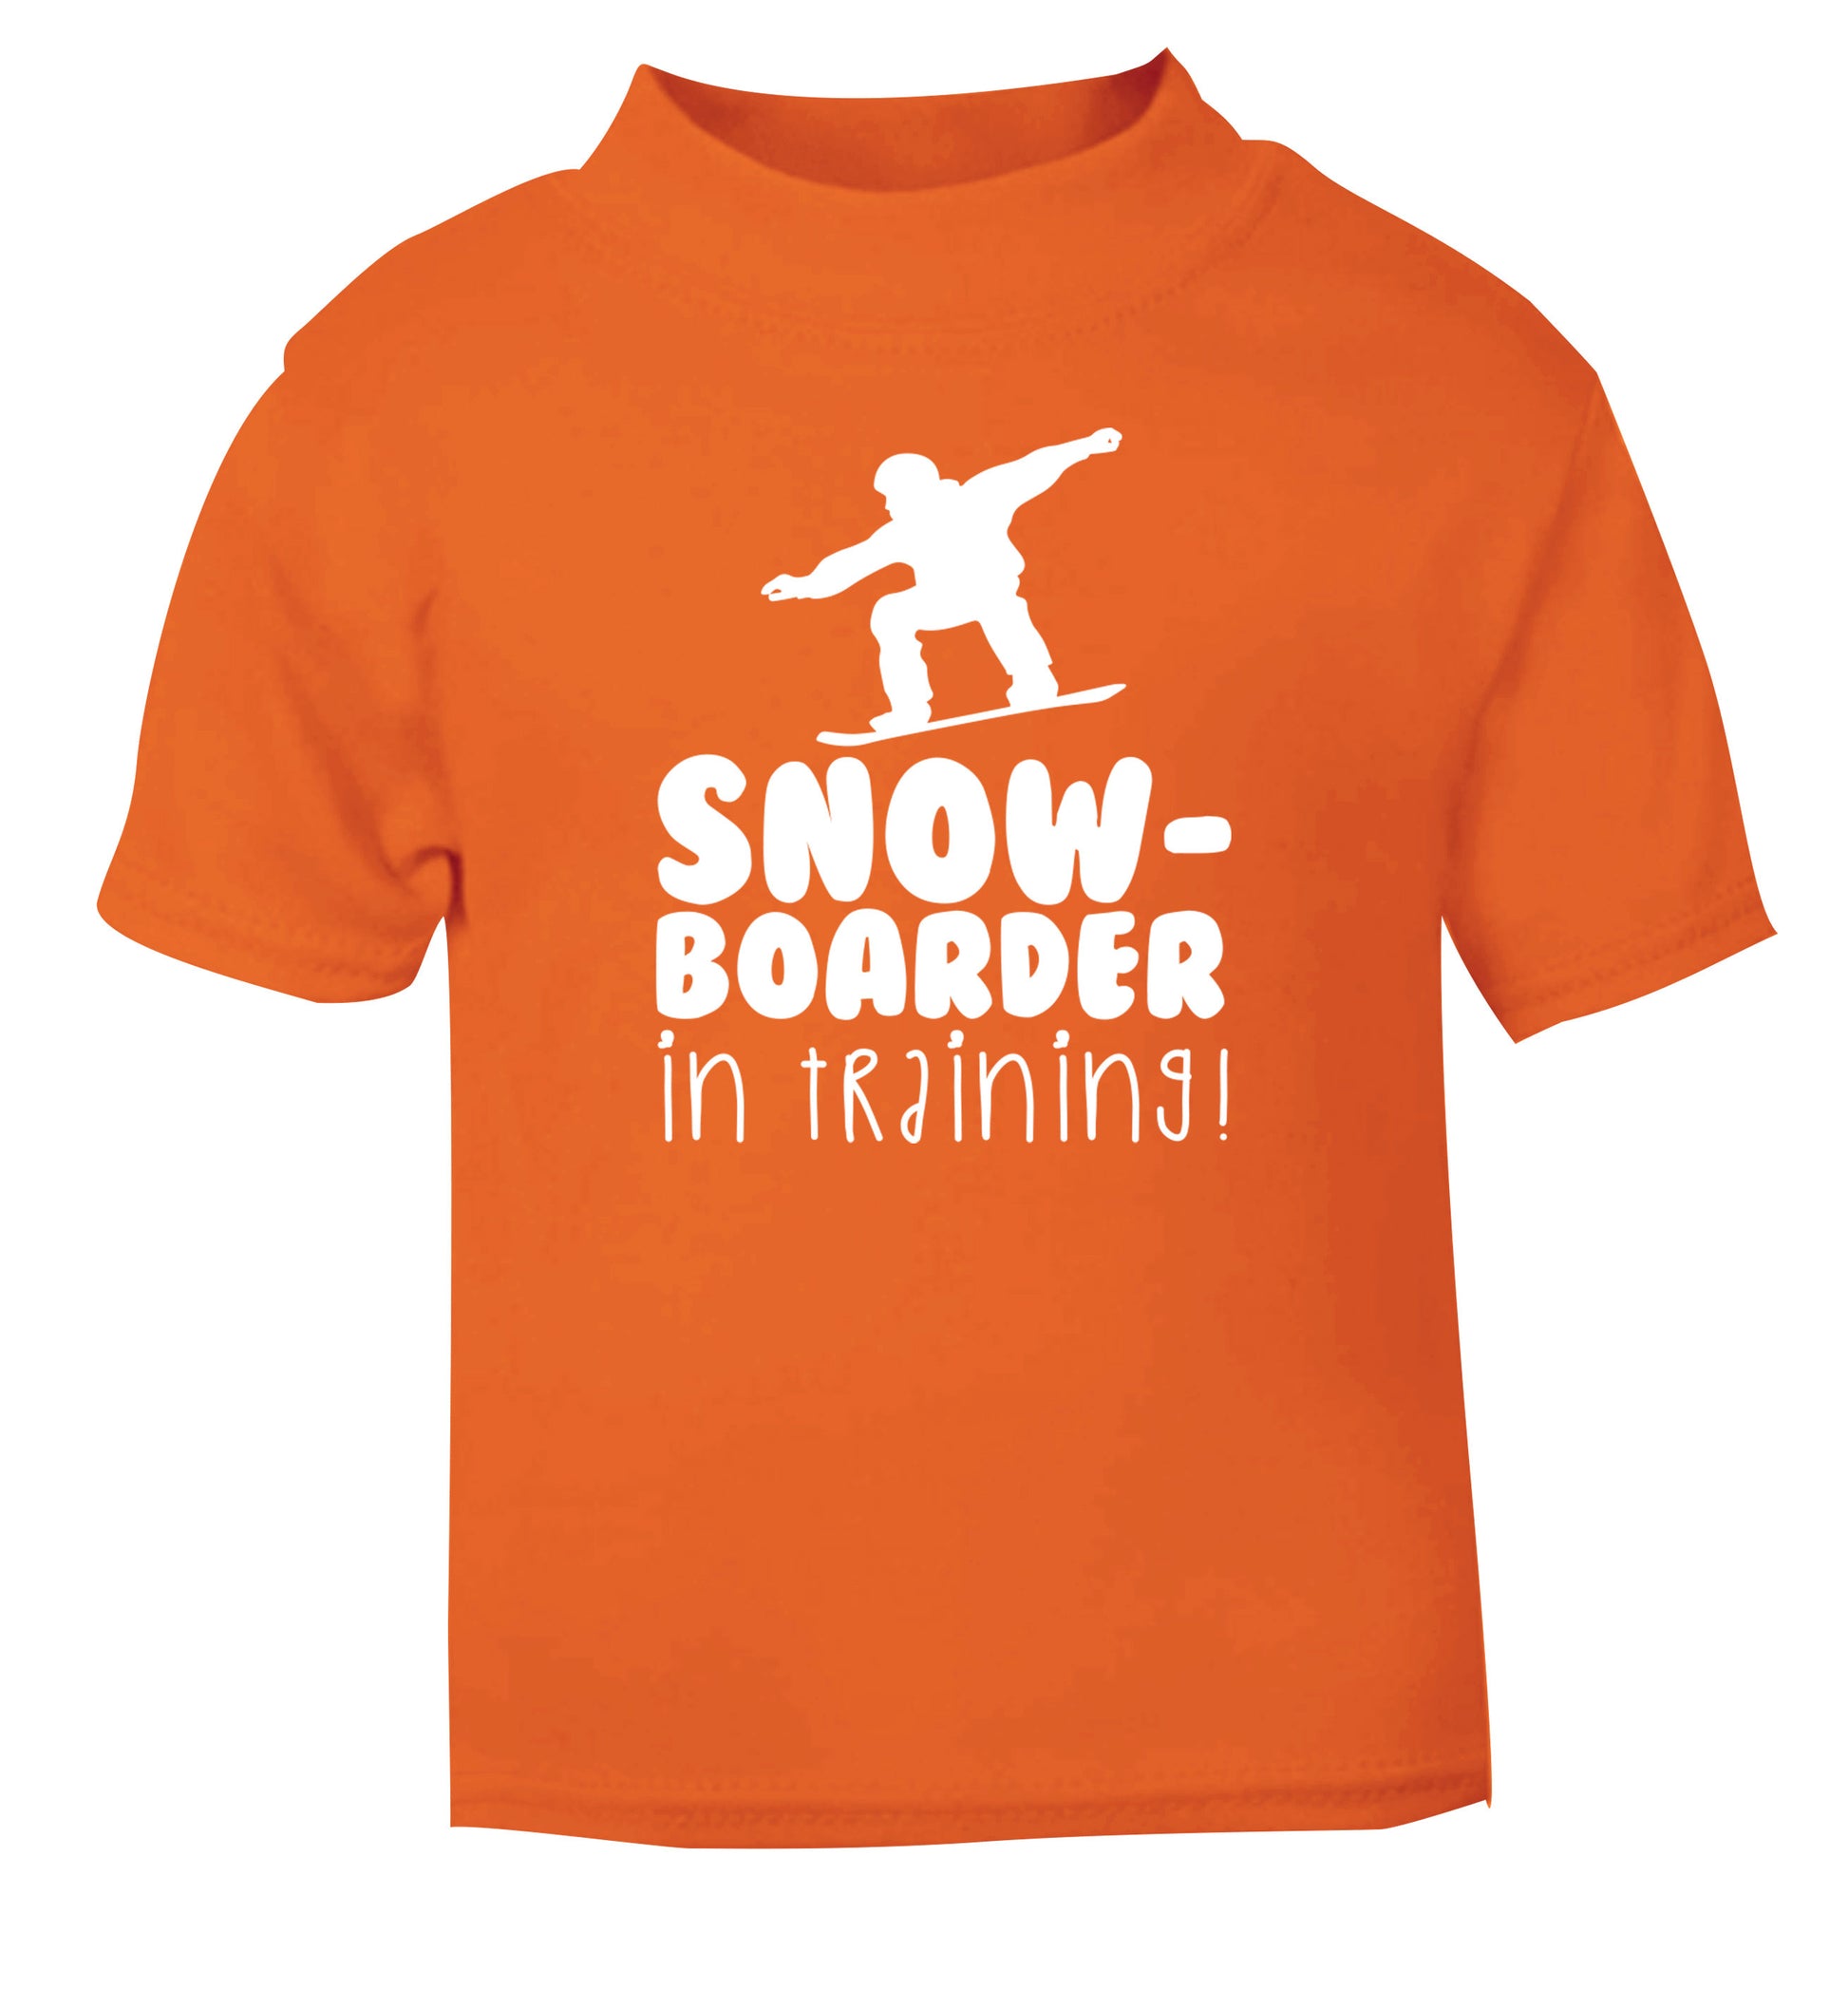 Snowboarder in training orange Baby Toddler Tshirt 2 Years